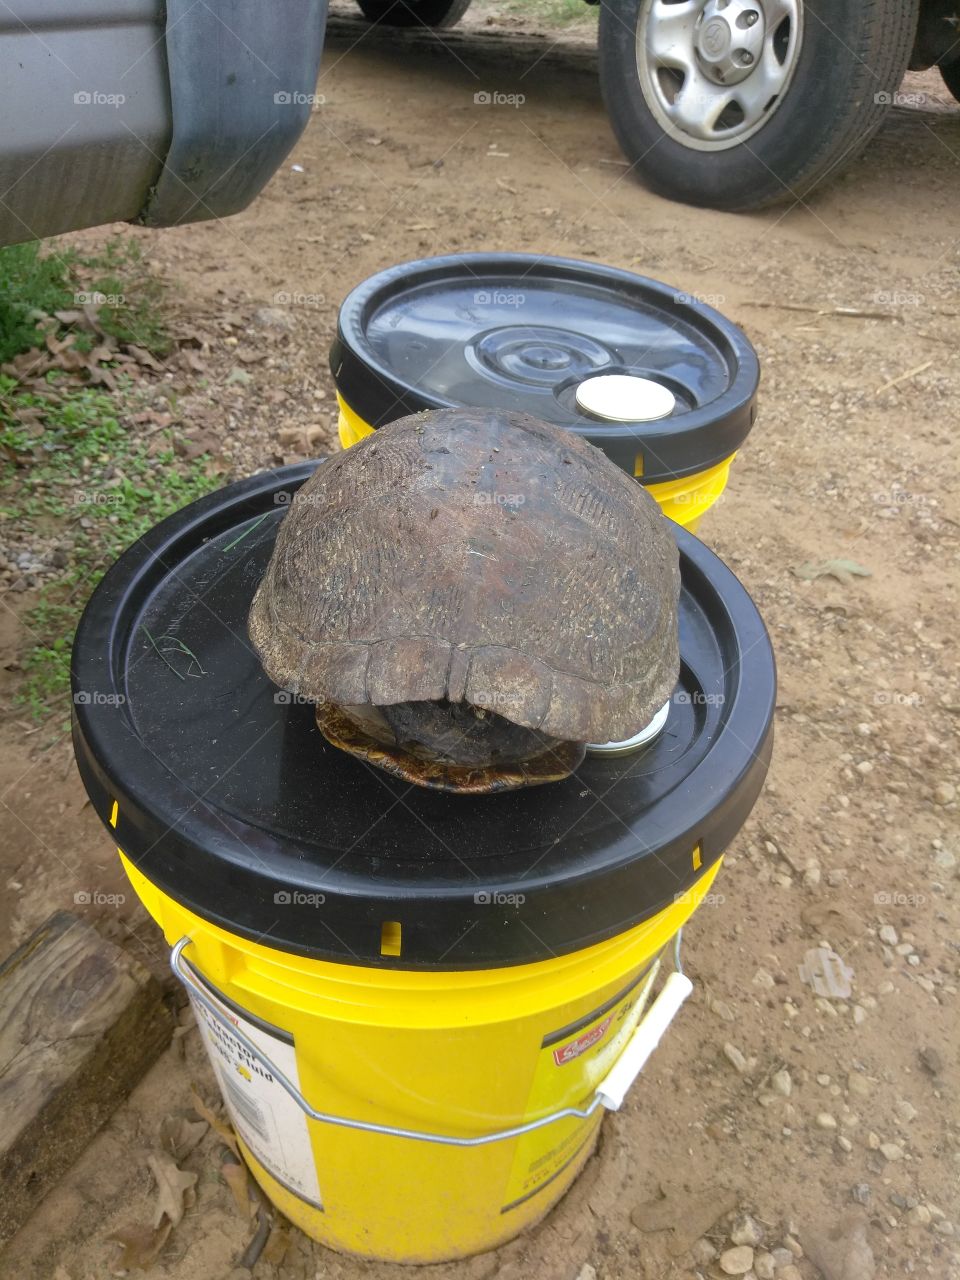 a turtle shell I found